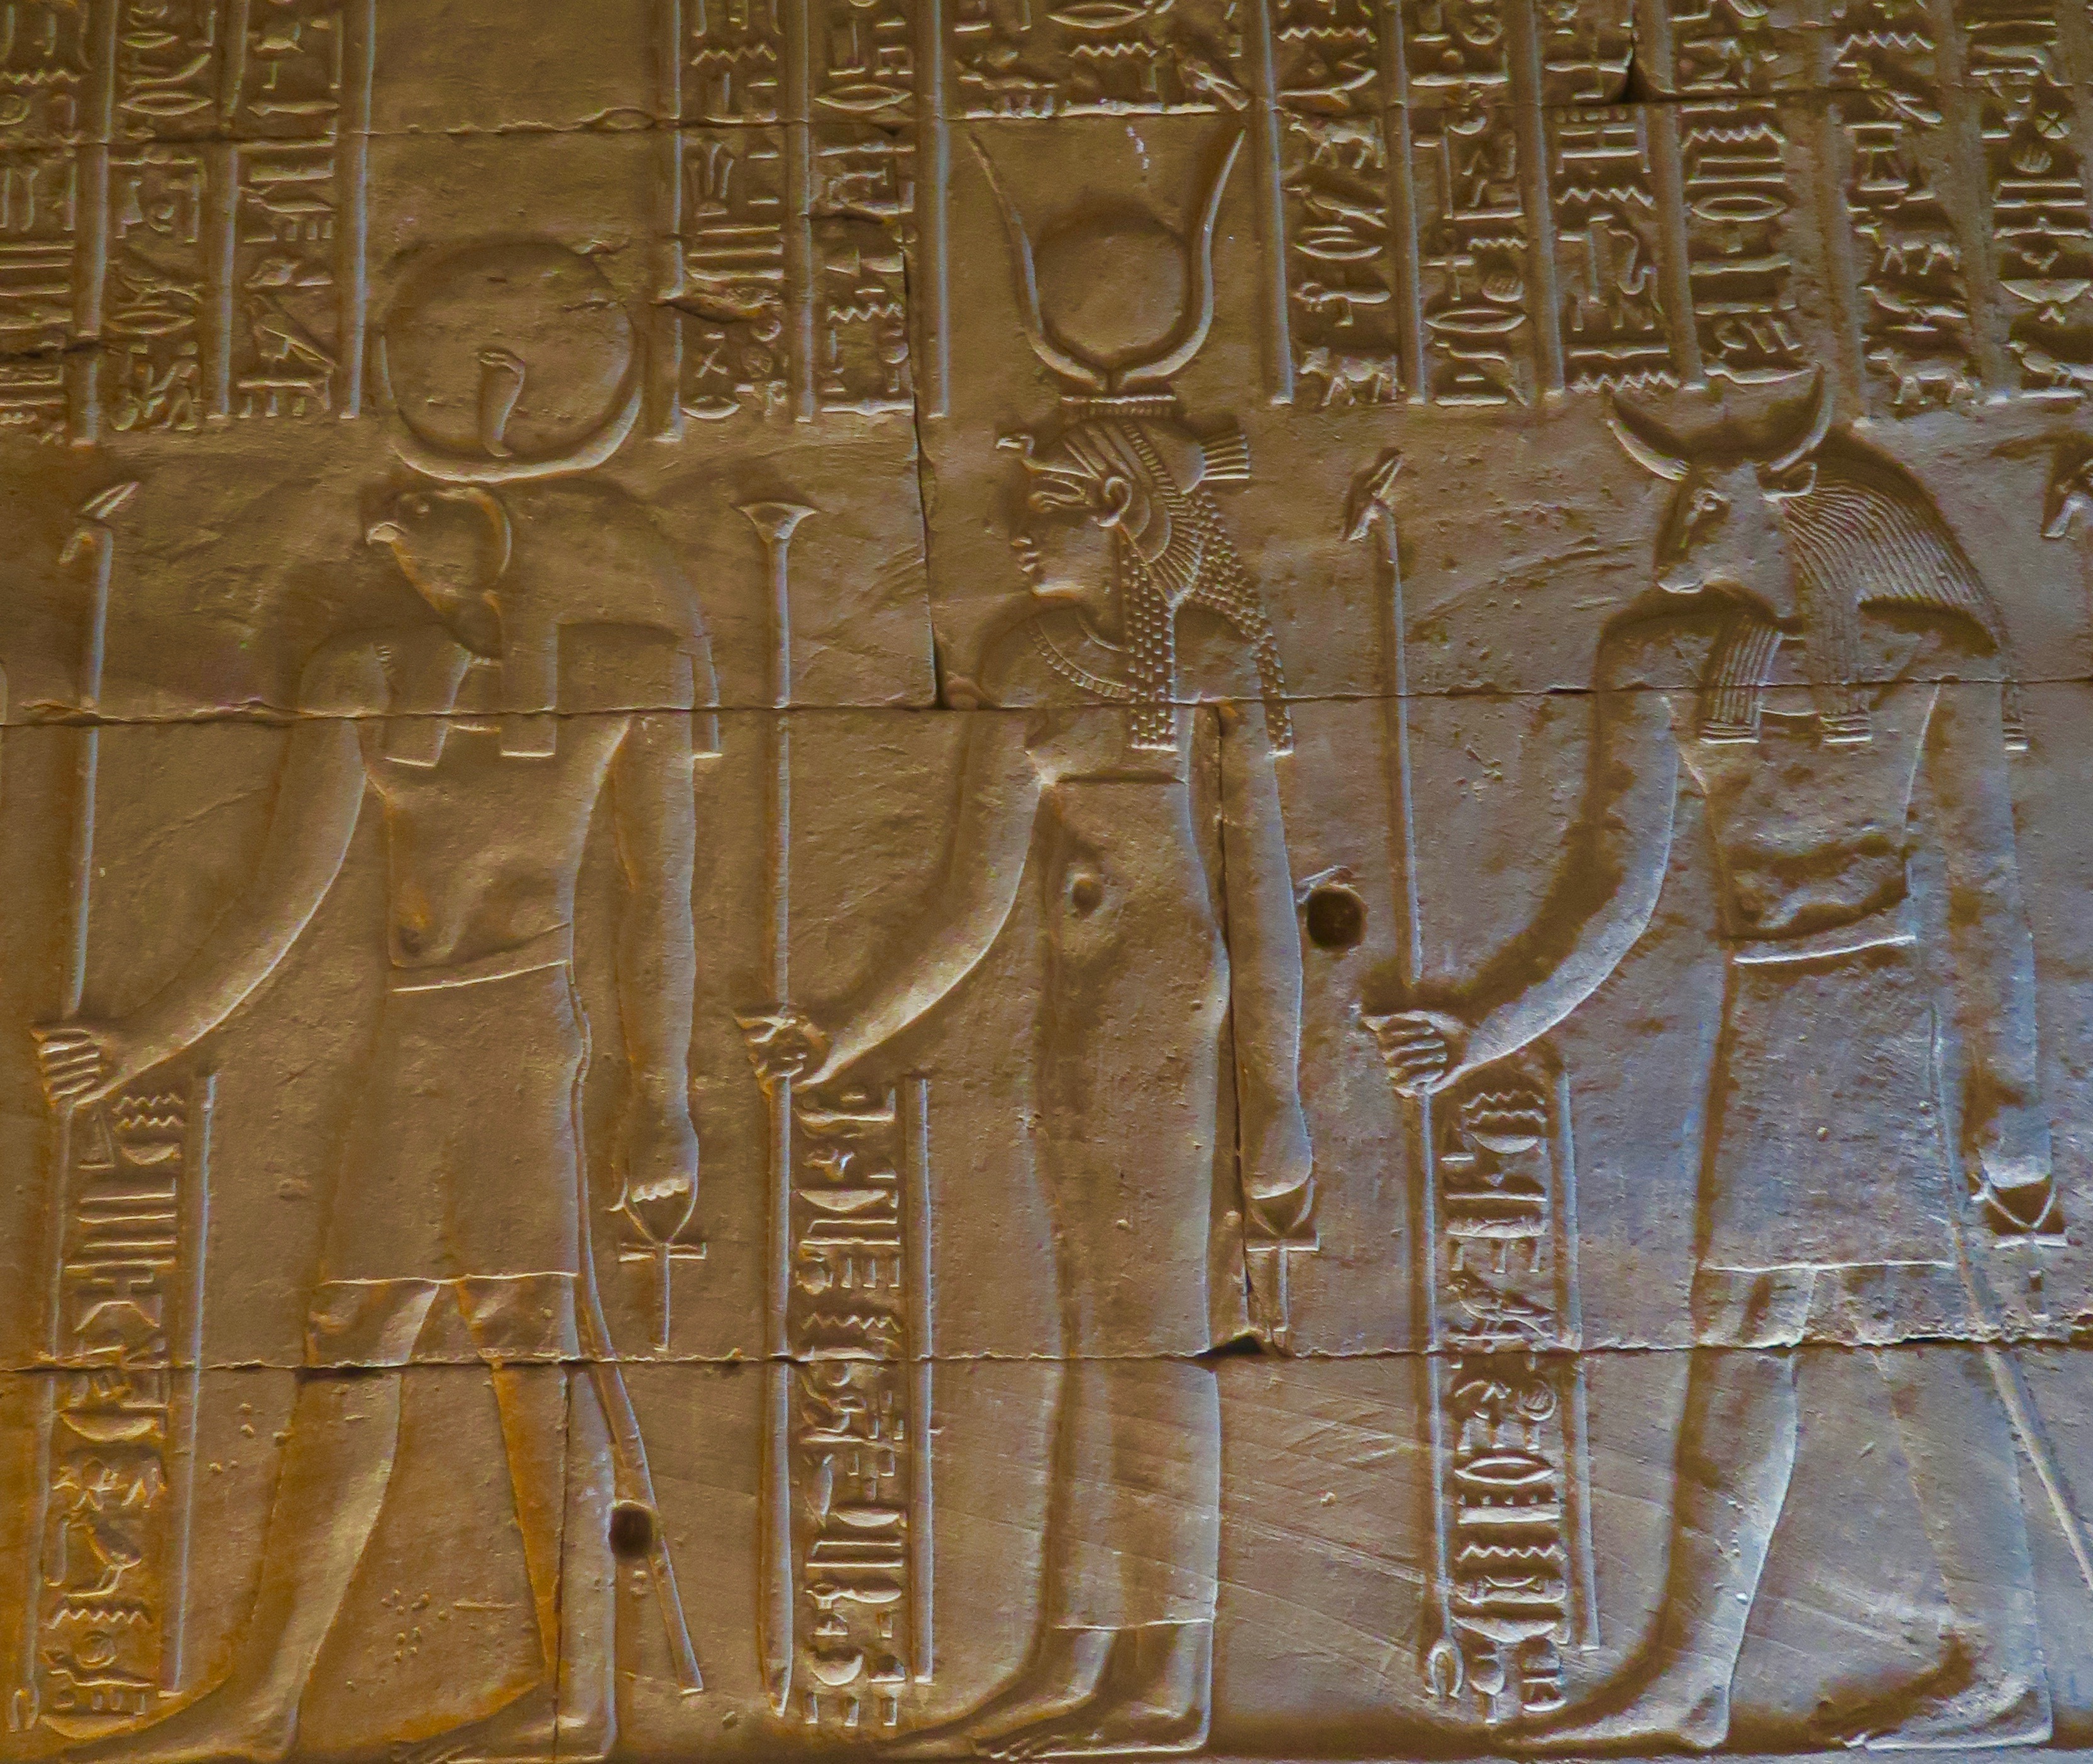 Horus, Isis and Hathor